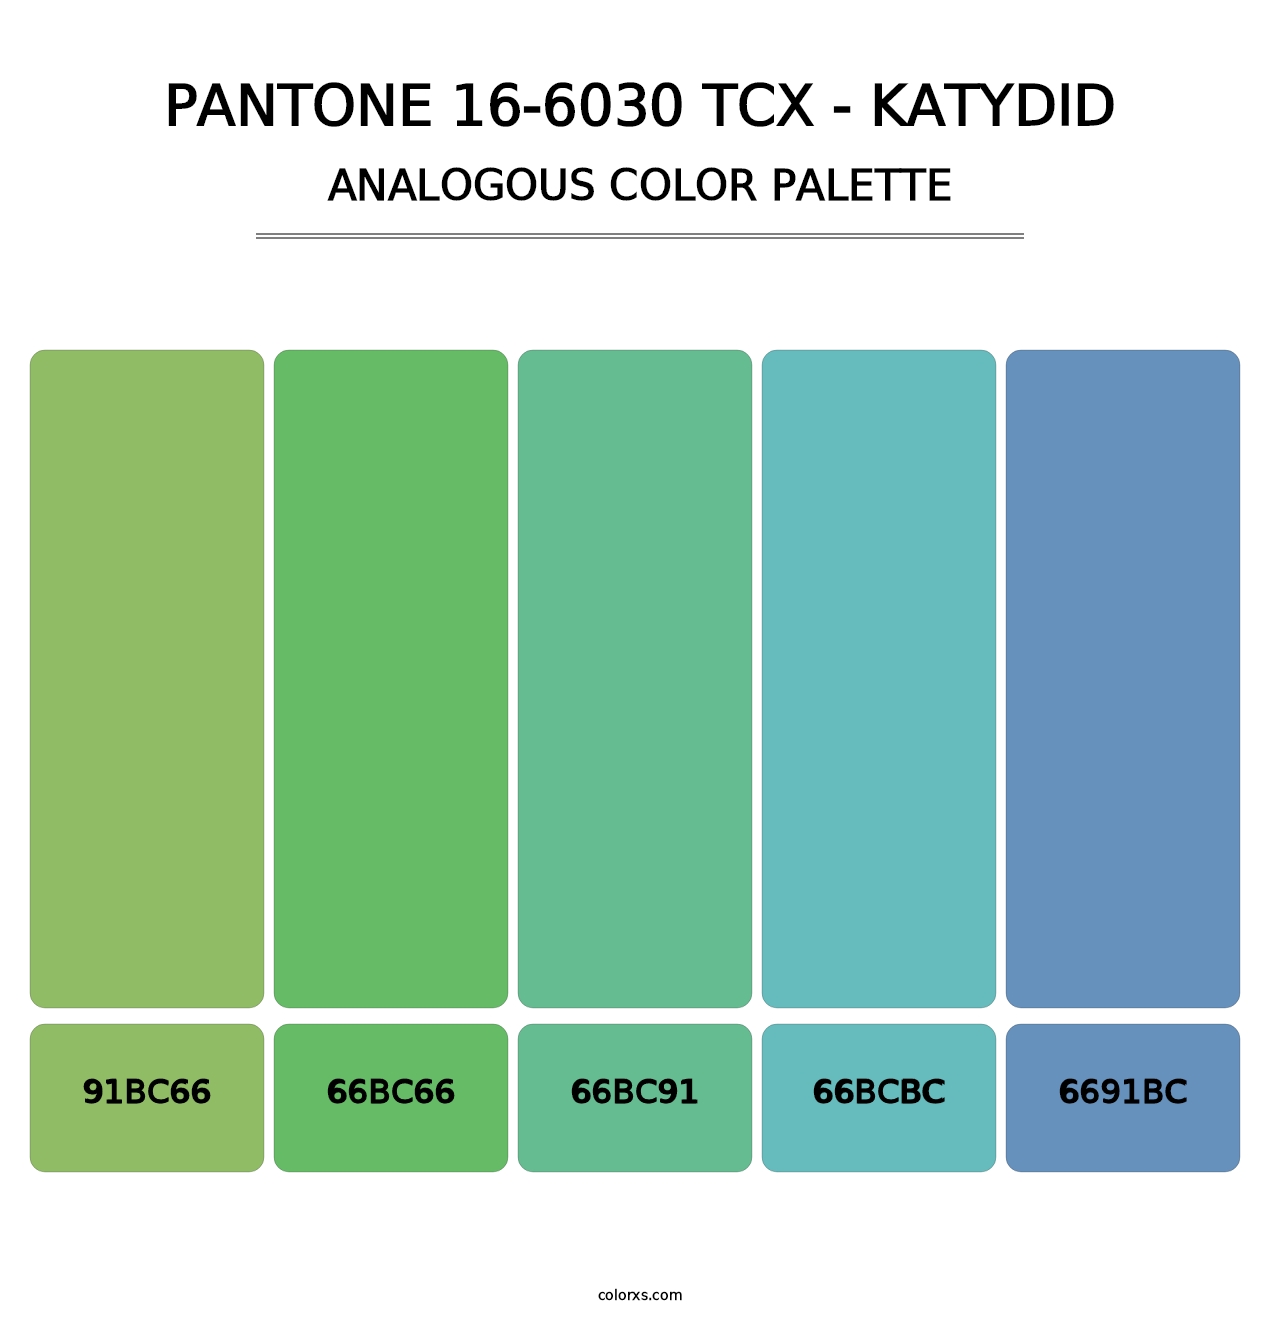 PANTONE 16-6030 TCX - Katydid - Analogous Color Palette